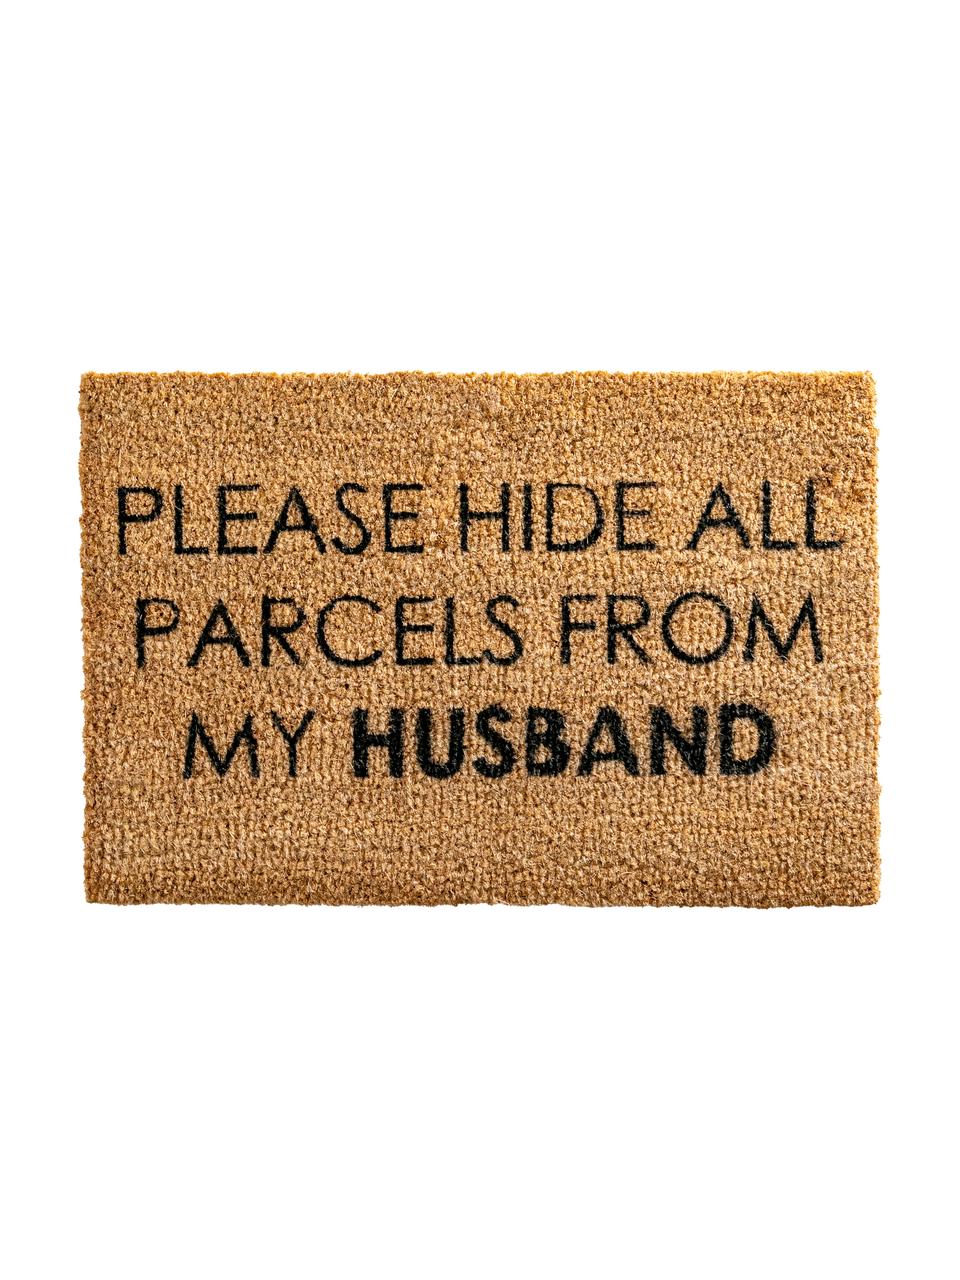 Felpudo Please hide all parcels from my husband, Parte superior: fibras de coco, Parte trasera: PVC, Marrón, An 40 x L 60 cm